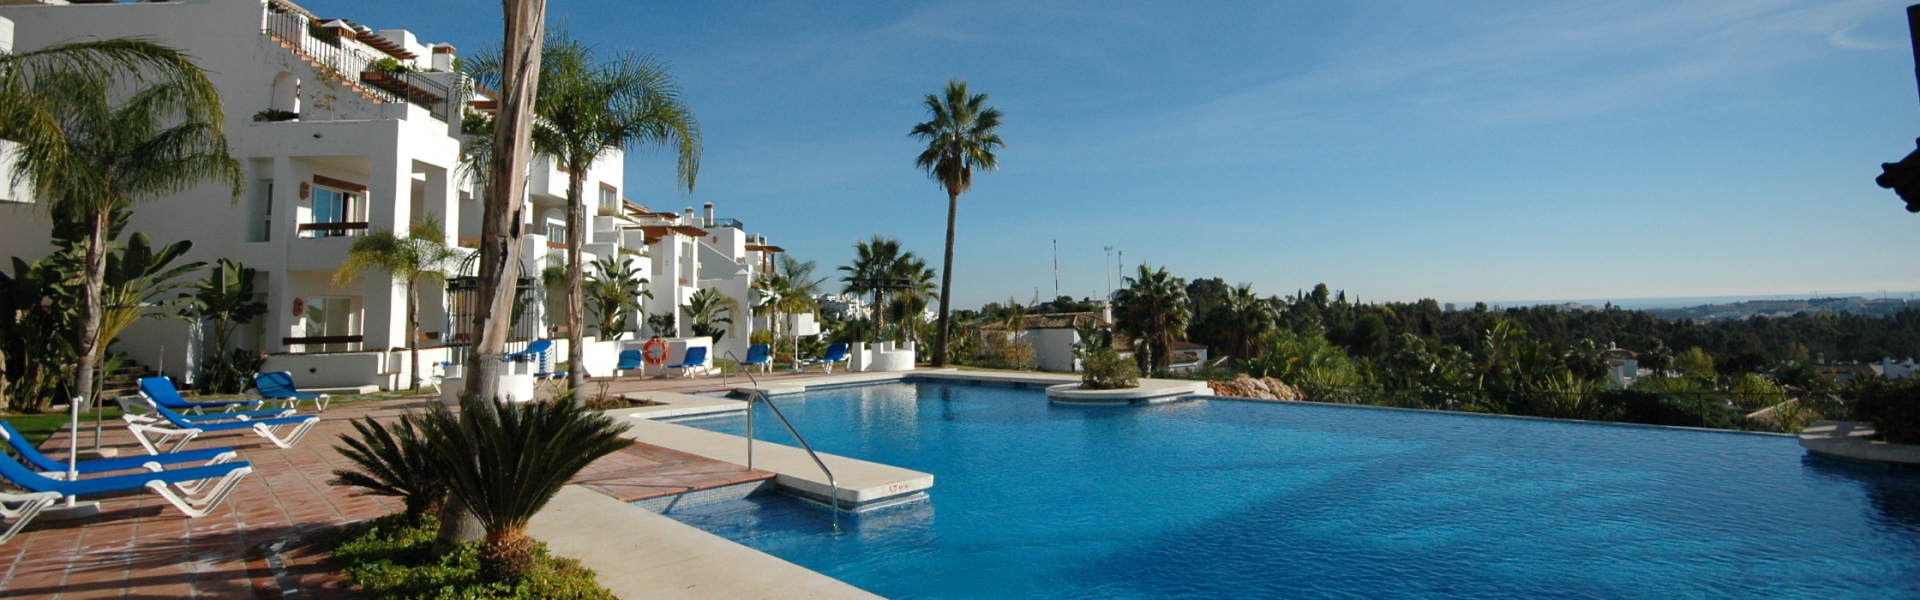 Swimming Pool Las Tortugas Property Nueva Andalucia